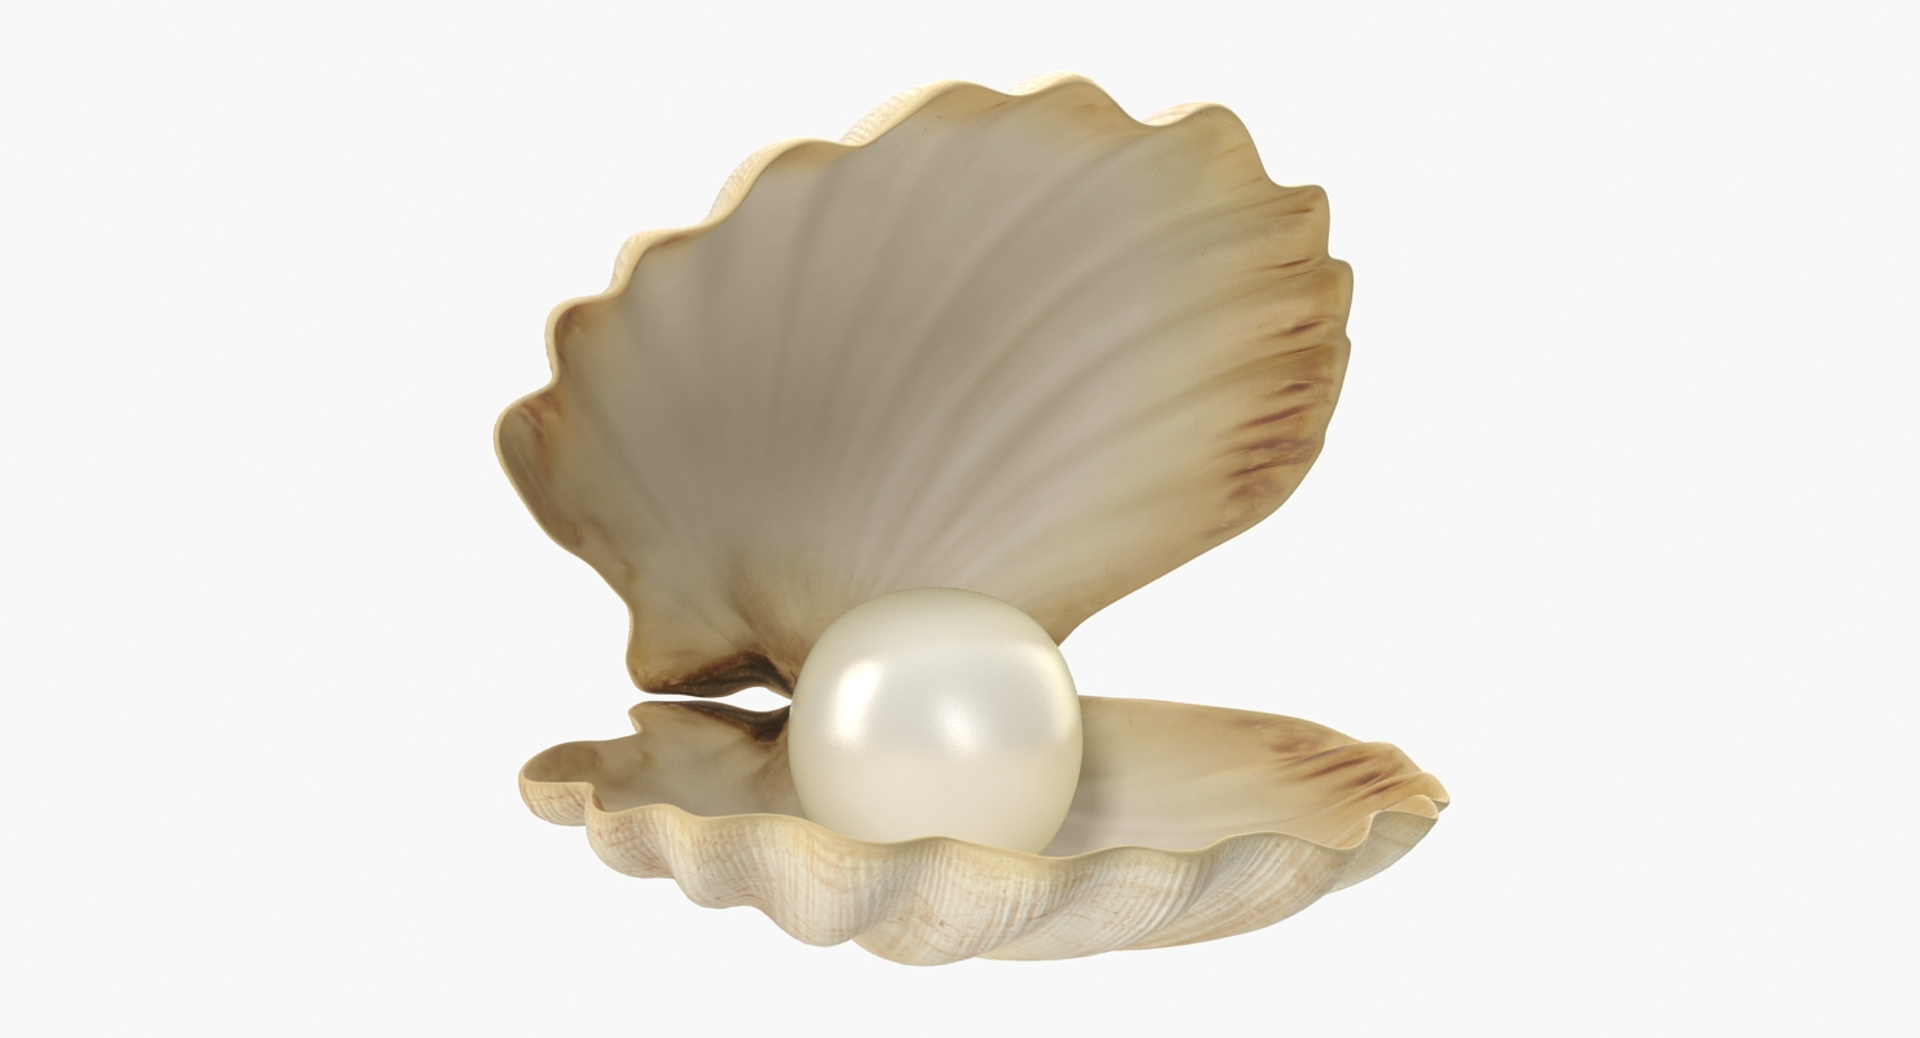 sea shell pearl 3D model https://p.turbosquid.com/ts-thumb/JJ/zsjHhg/YqfQDBna/sea_shell_with_pearl_360/jpg/1515617313/1920x1080/turn_fit_q99/412325cc1804f6aca557c3bb5f6a162f145326d7/sea_shell_with_pearl_360-1.jpg